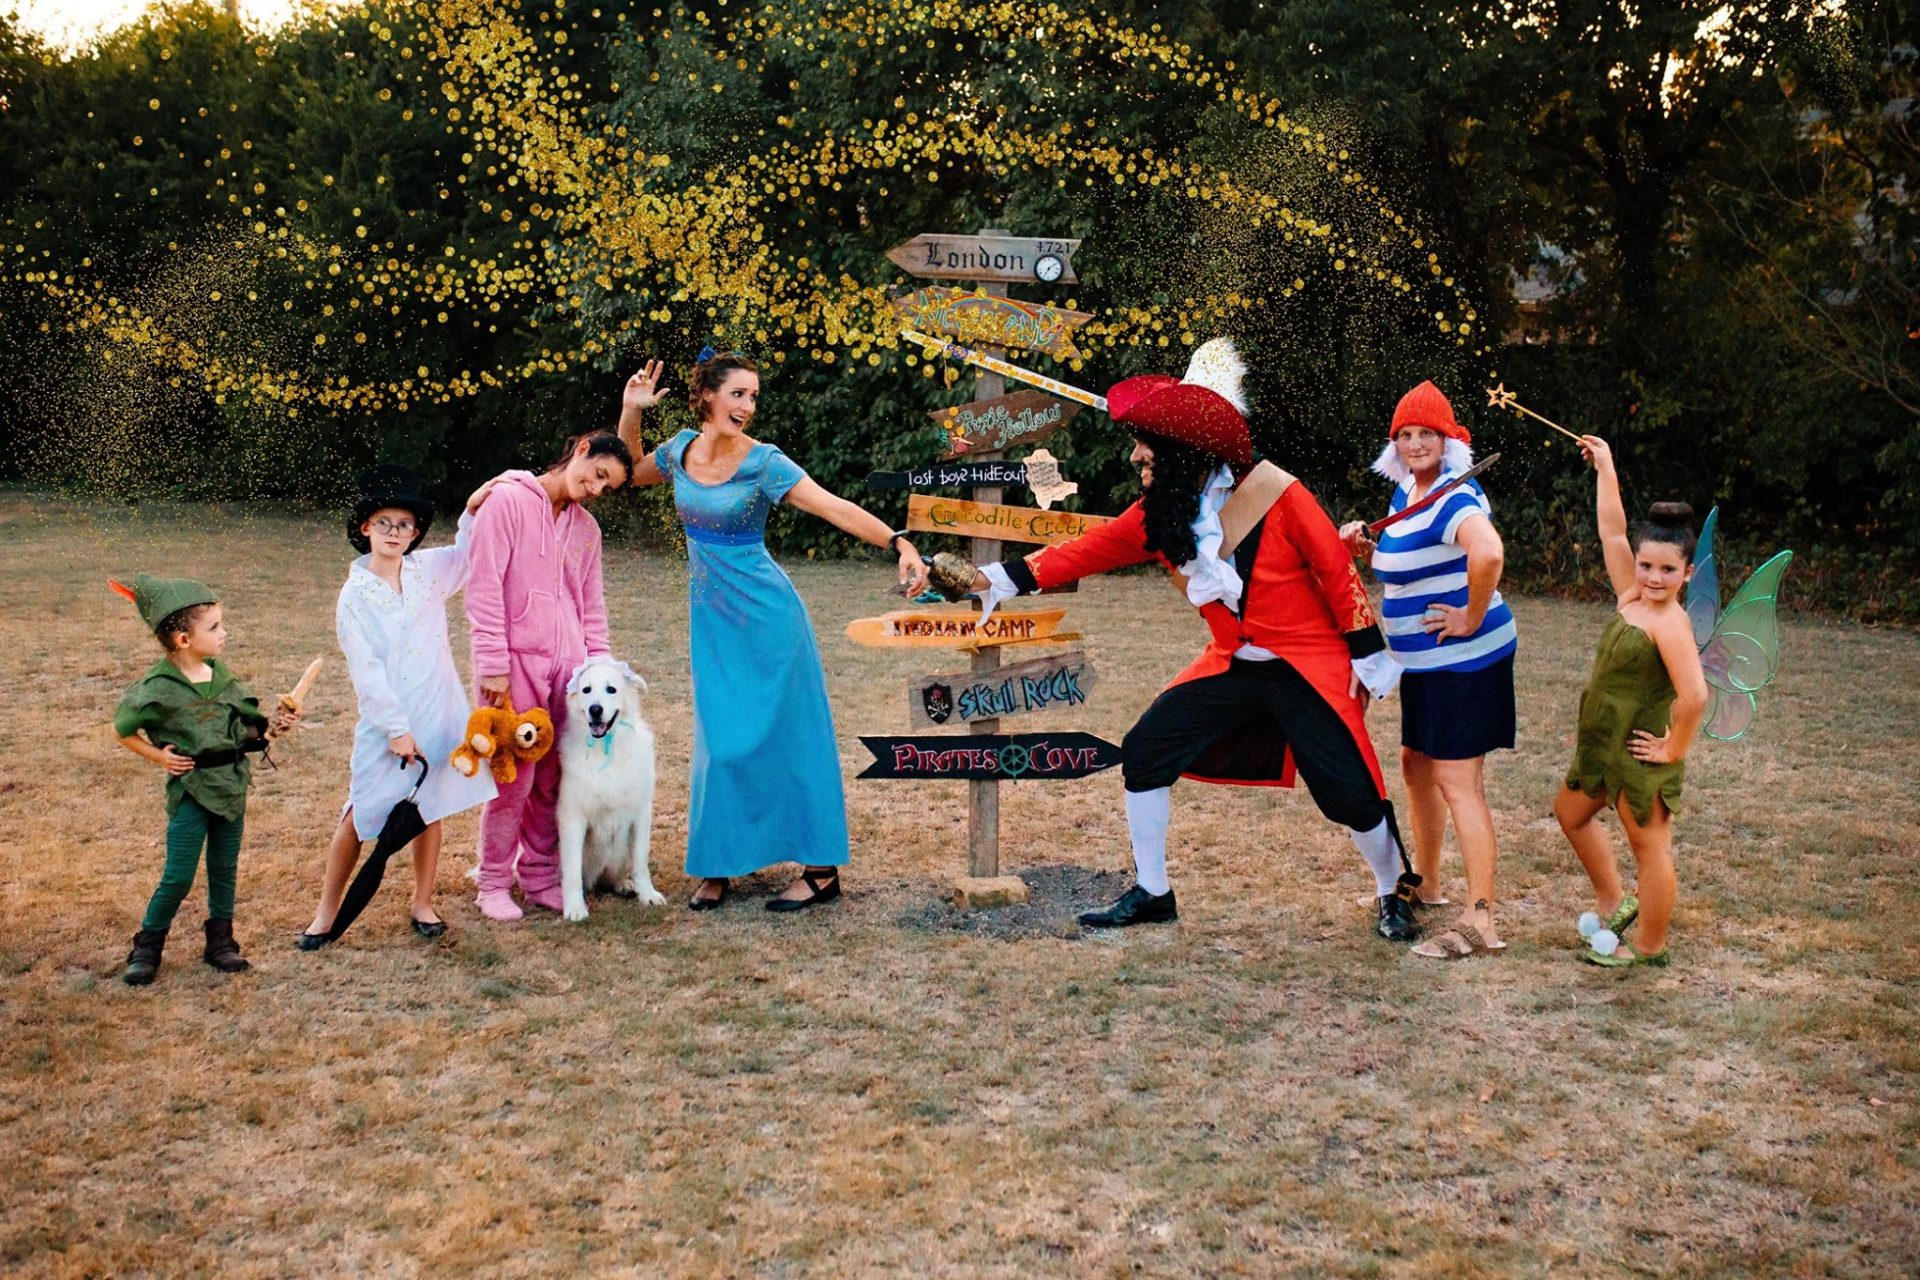 Peter Pan Family Group Costume photo shoot goals!